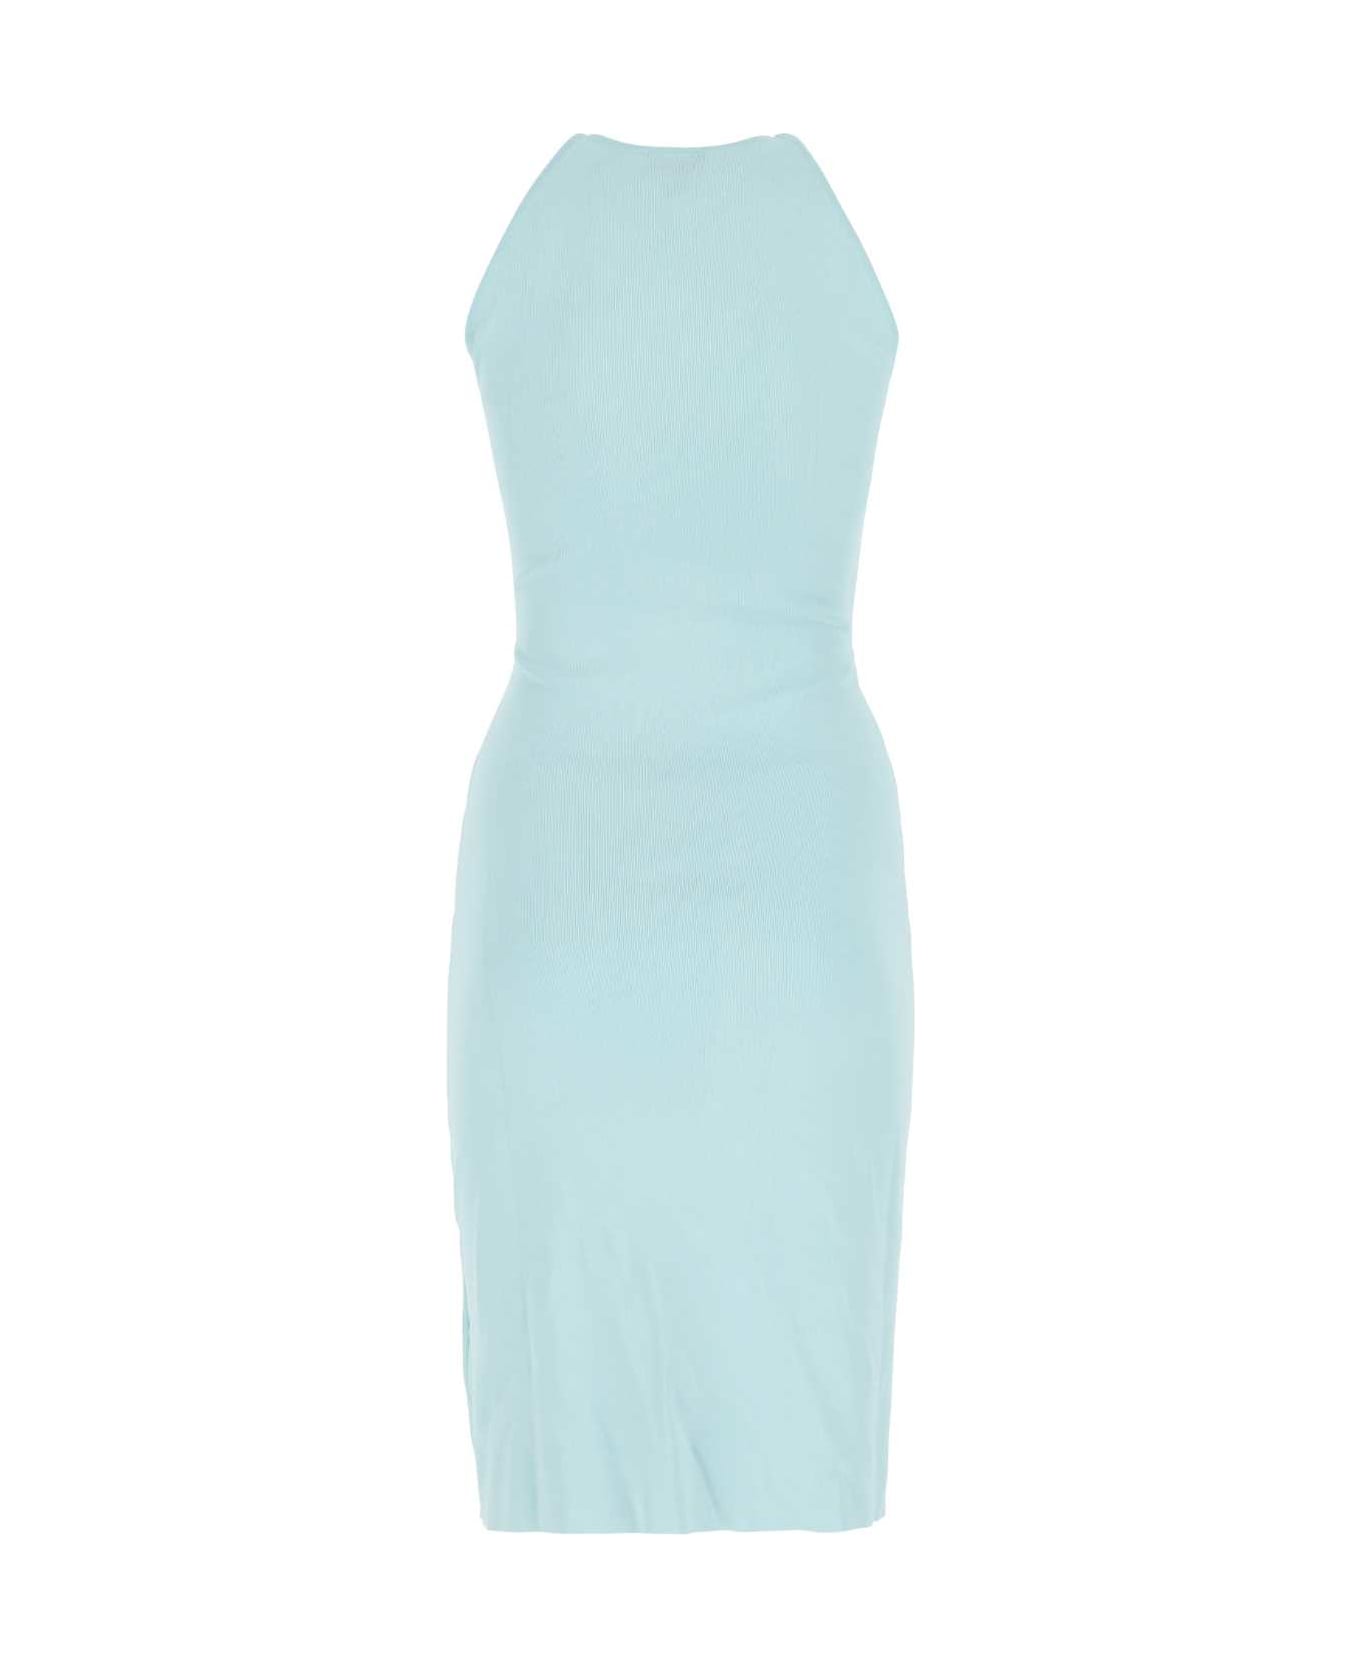 Bottega Veneta Pastel Light Blue Stretch Viscose Blend Dress - 8955